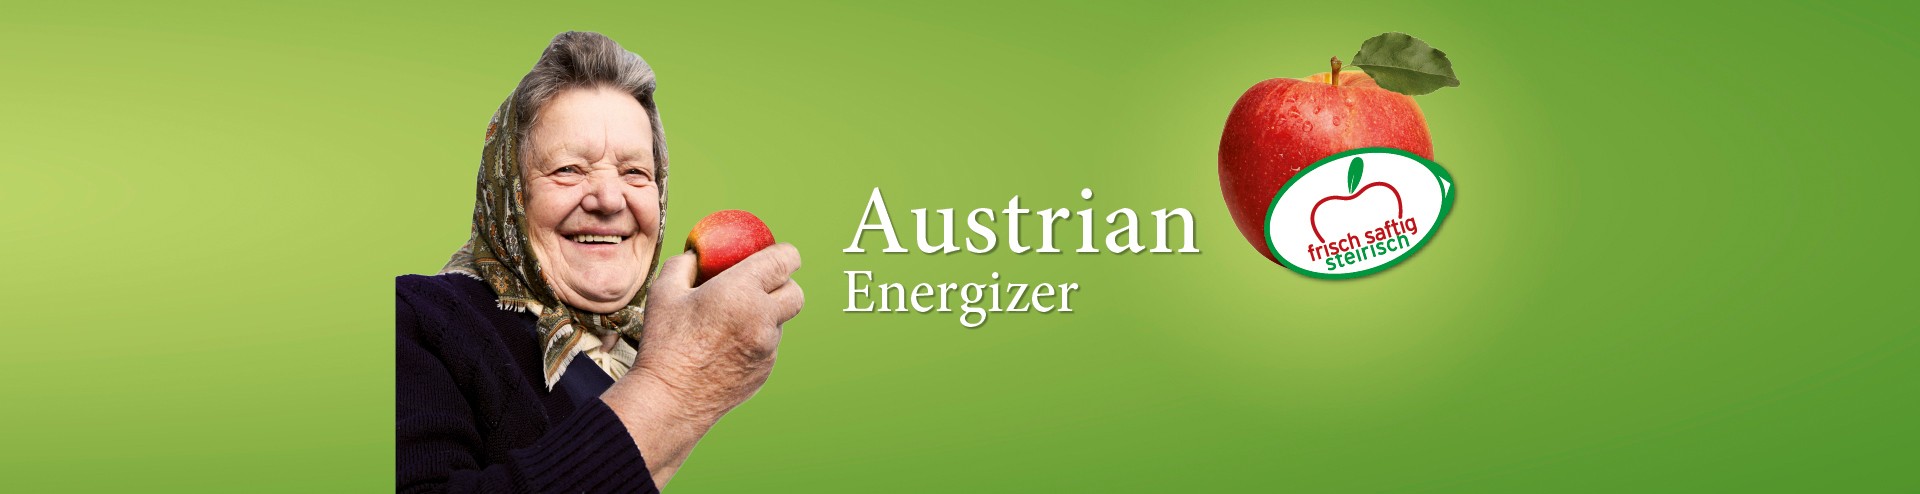 Austrian Energizer